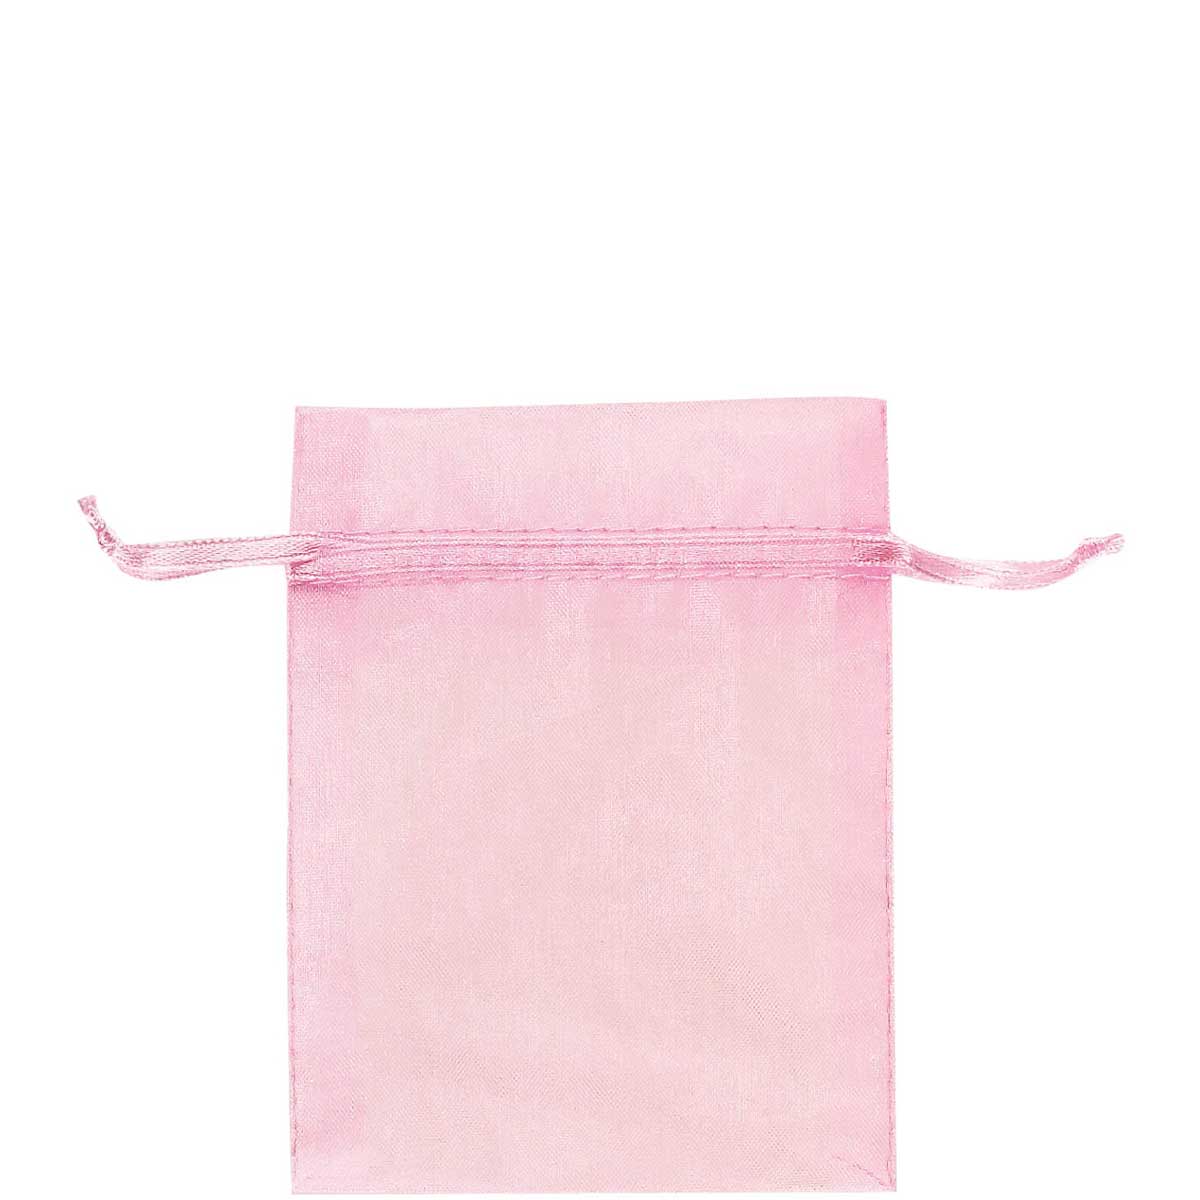 New Pink Organza Bags 24pcs Favours - Party Centre